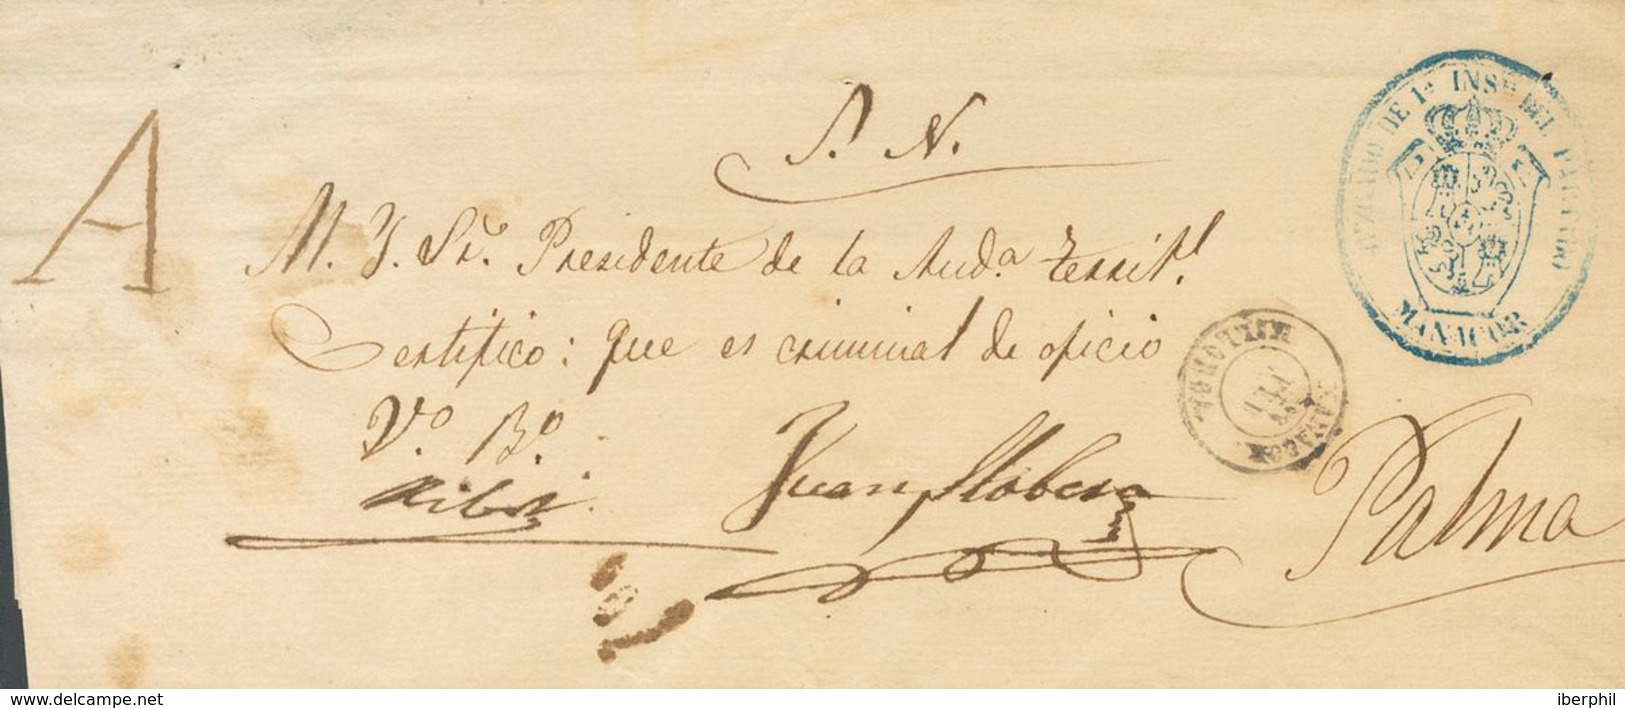 Prefilatelia, Baleares. Sobre. 1872. Plica Judicial De MANACOR A PALMA DE MALLORCA. Marca "A", De Abono Manuscrita Y Fec - ...-1850 Prefilatelia